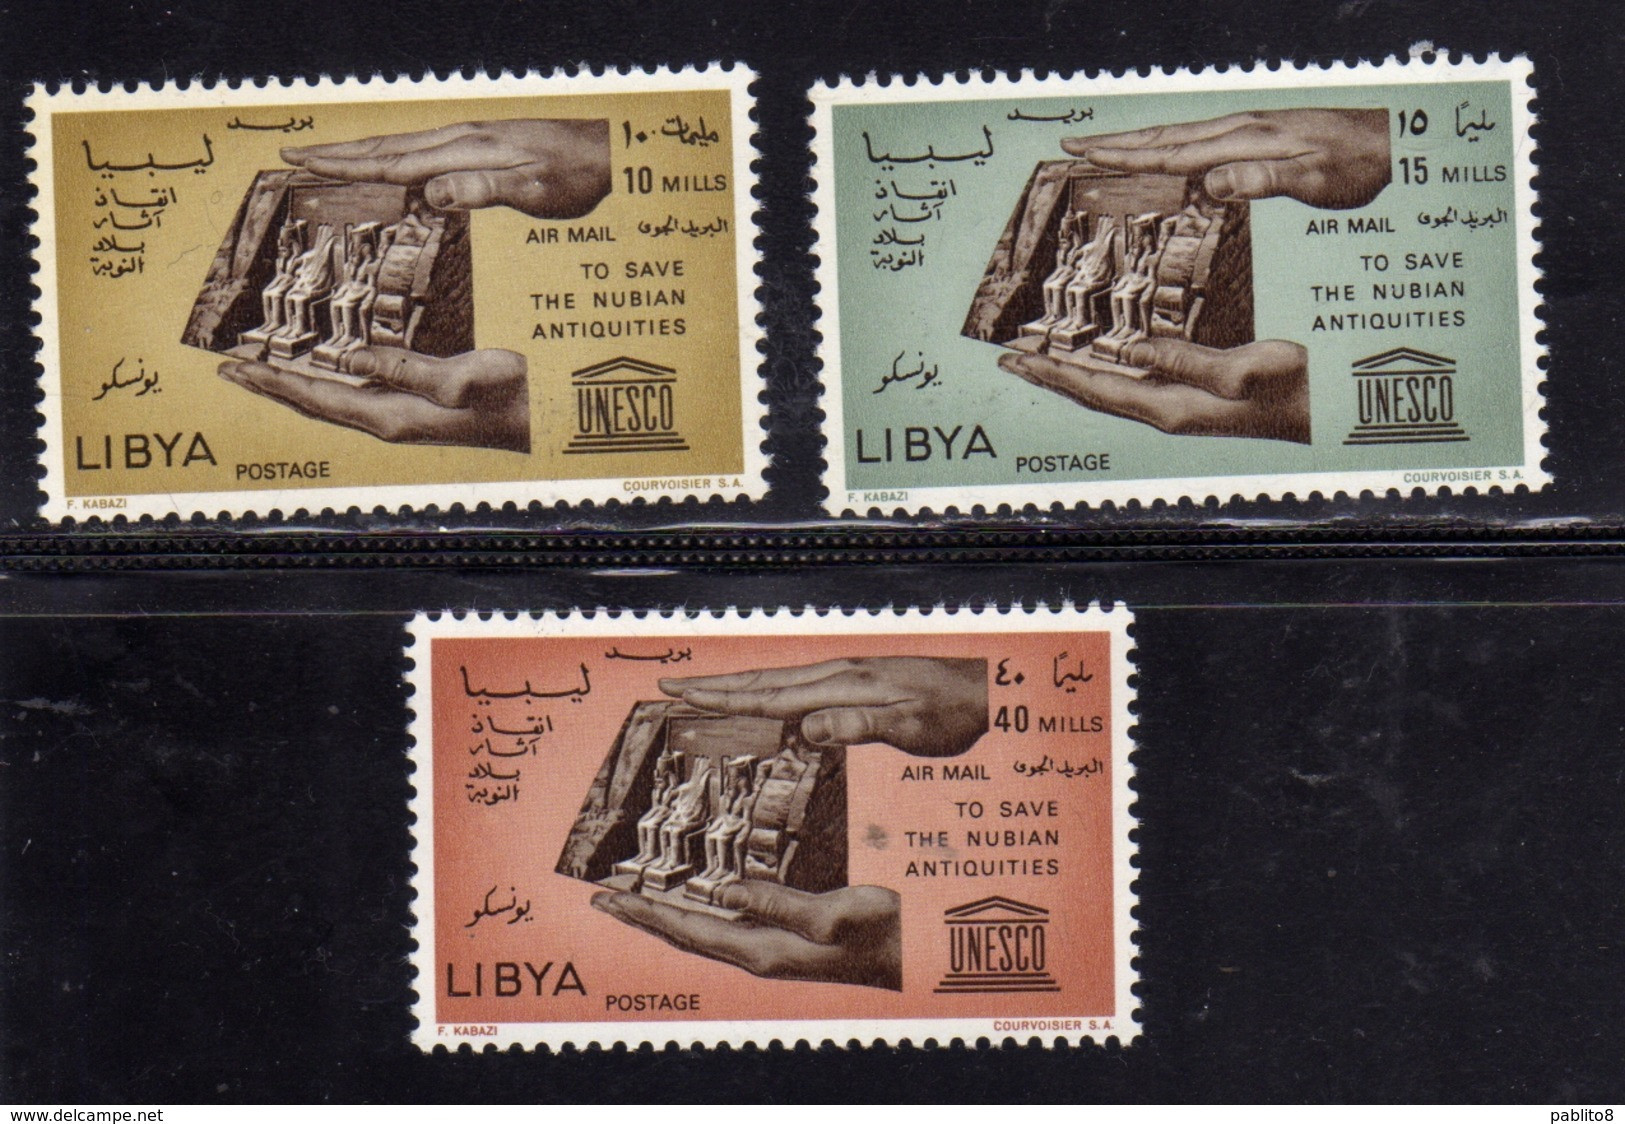 LIBYA LIBIA KINGDOM REGNO 1966 POSTA AEREA AIR MAIL SAVE THE NUBIAN ANTIQUITIES MONUMENTS MONUMENTI NUBIA SERIE SET MNH - Libye